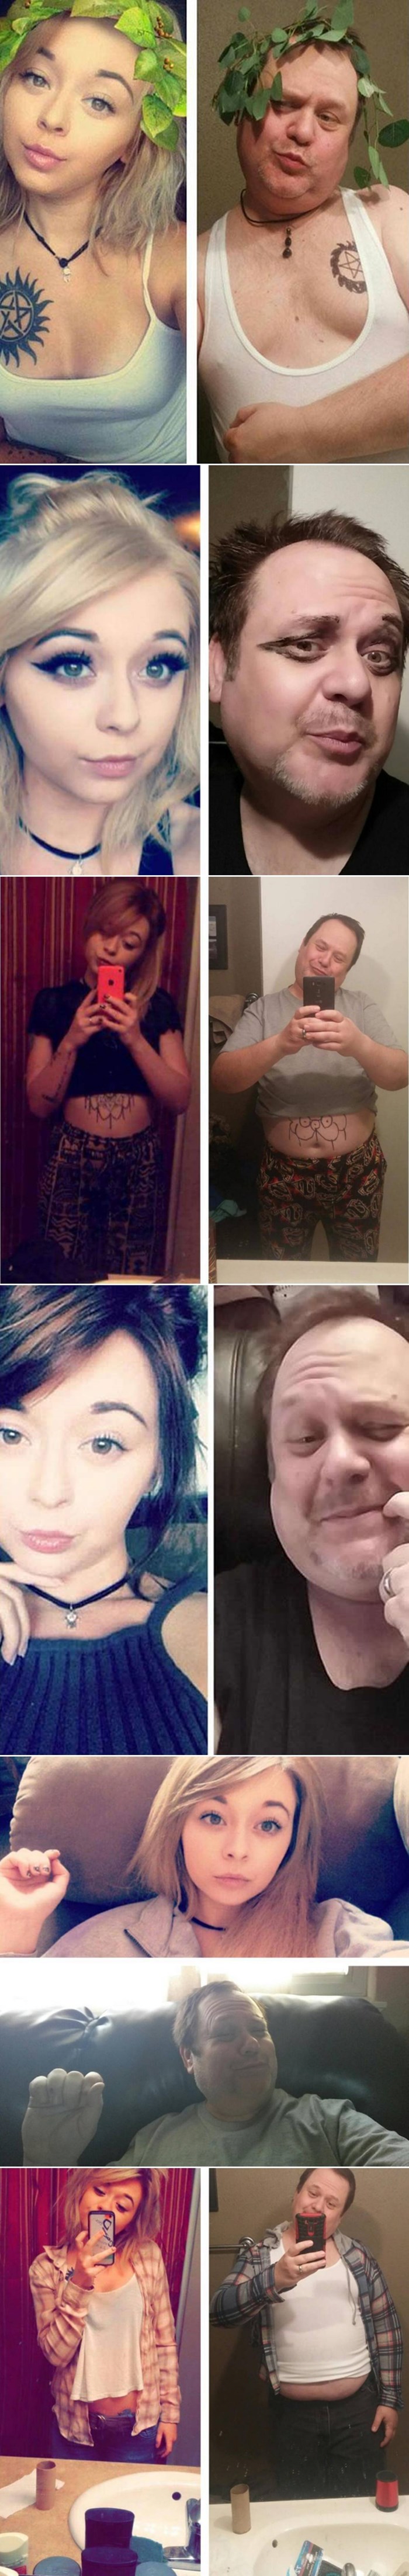 Tata kćeri složio neugodnjak kopiranjem njenih "seksi" selfija